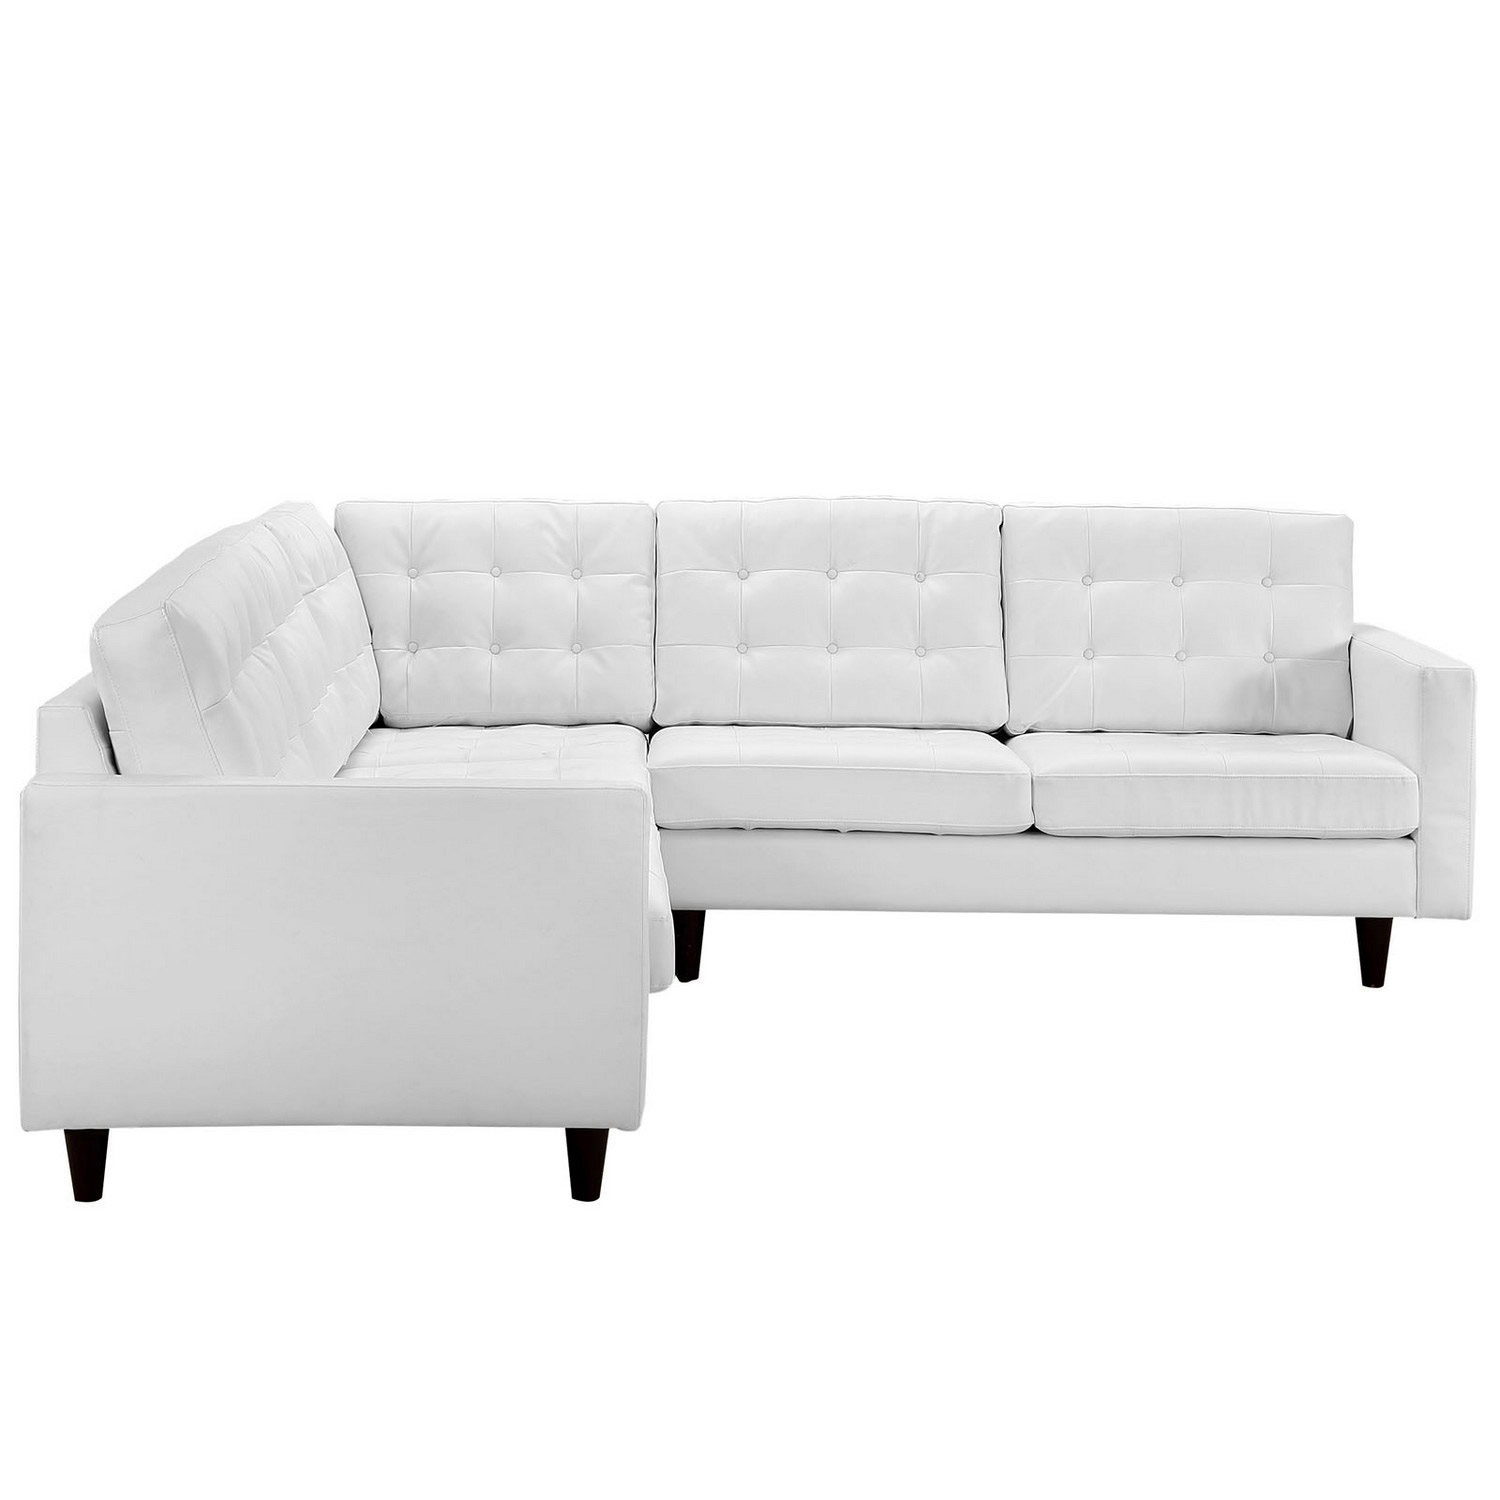 Modway Empress 3 Piece Leather Sectional Sofa Set - White